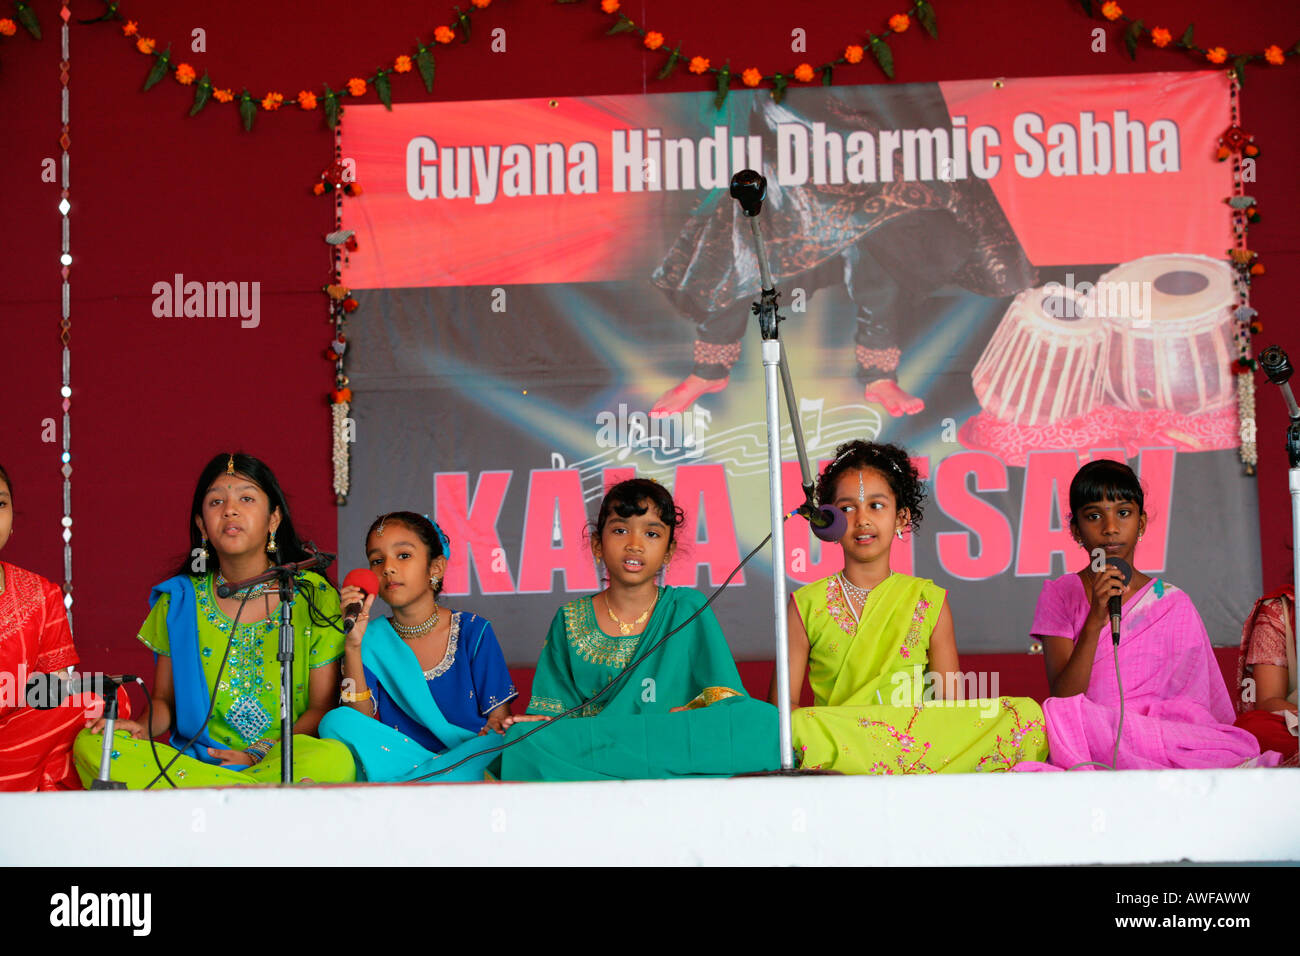 Músicos de etnia india en un festival hindú, Georgetown, Guyana, Sudamérica Foto de stock